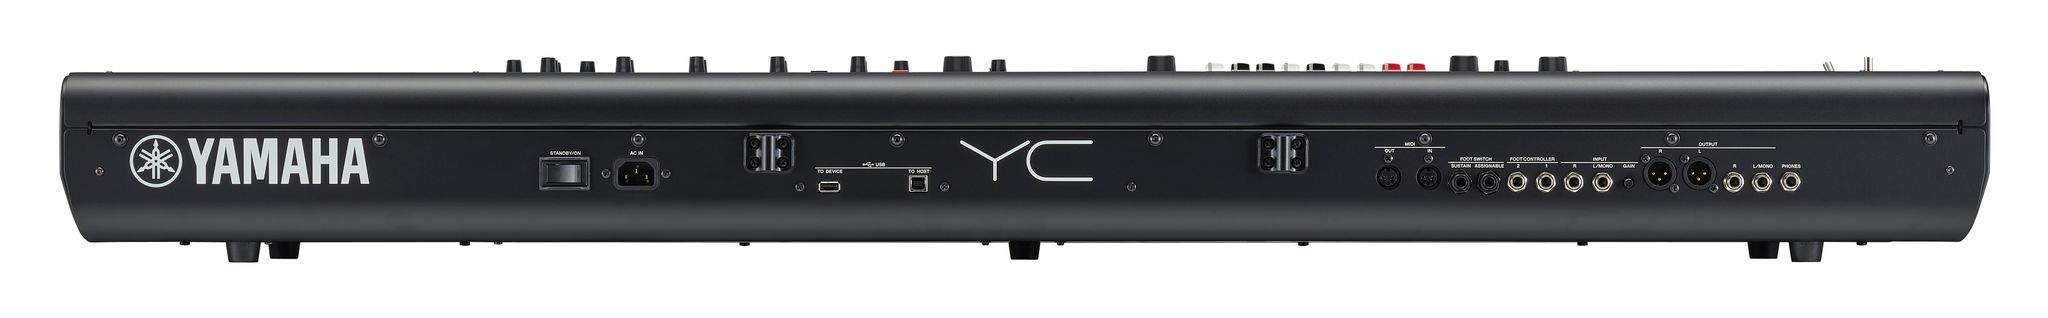 Yamaha Yc 88 - Stage keyboard - Variation 2